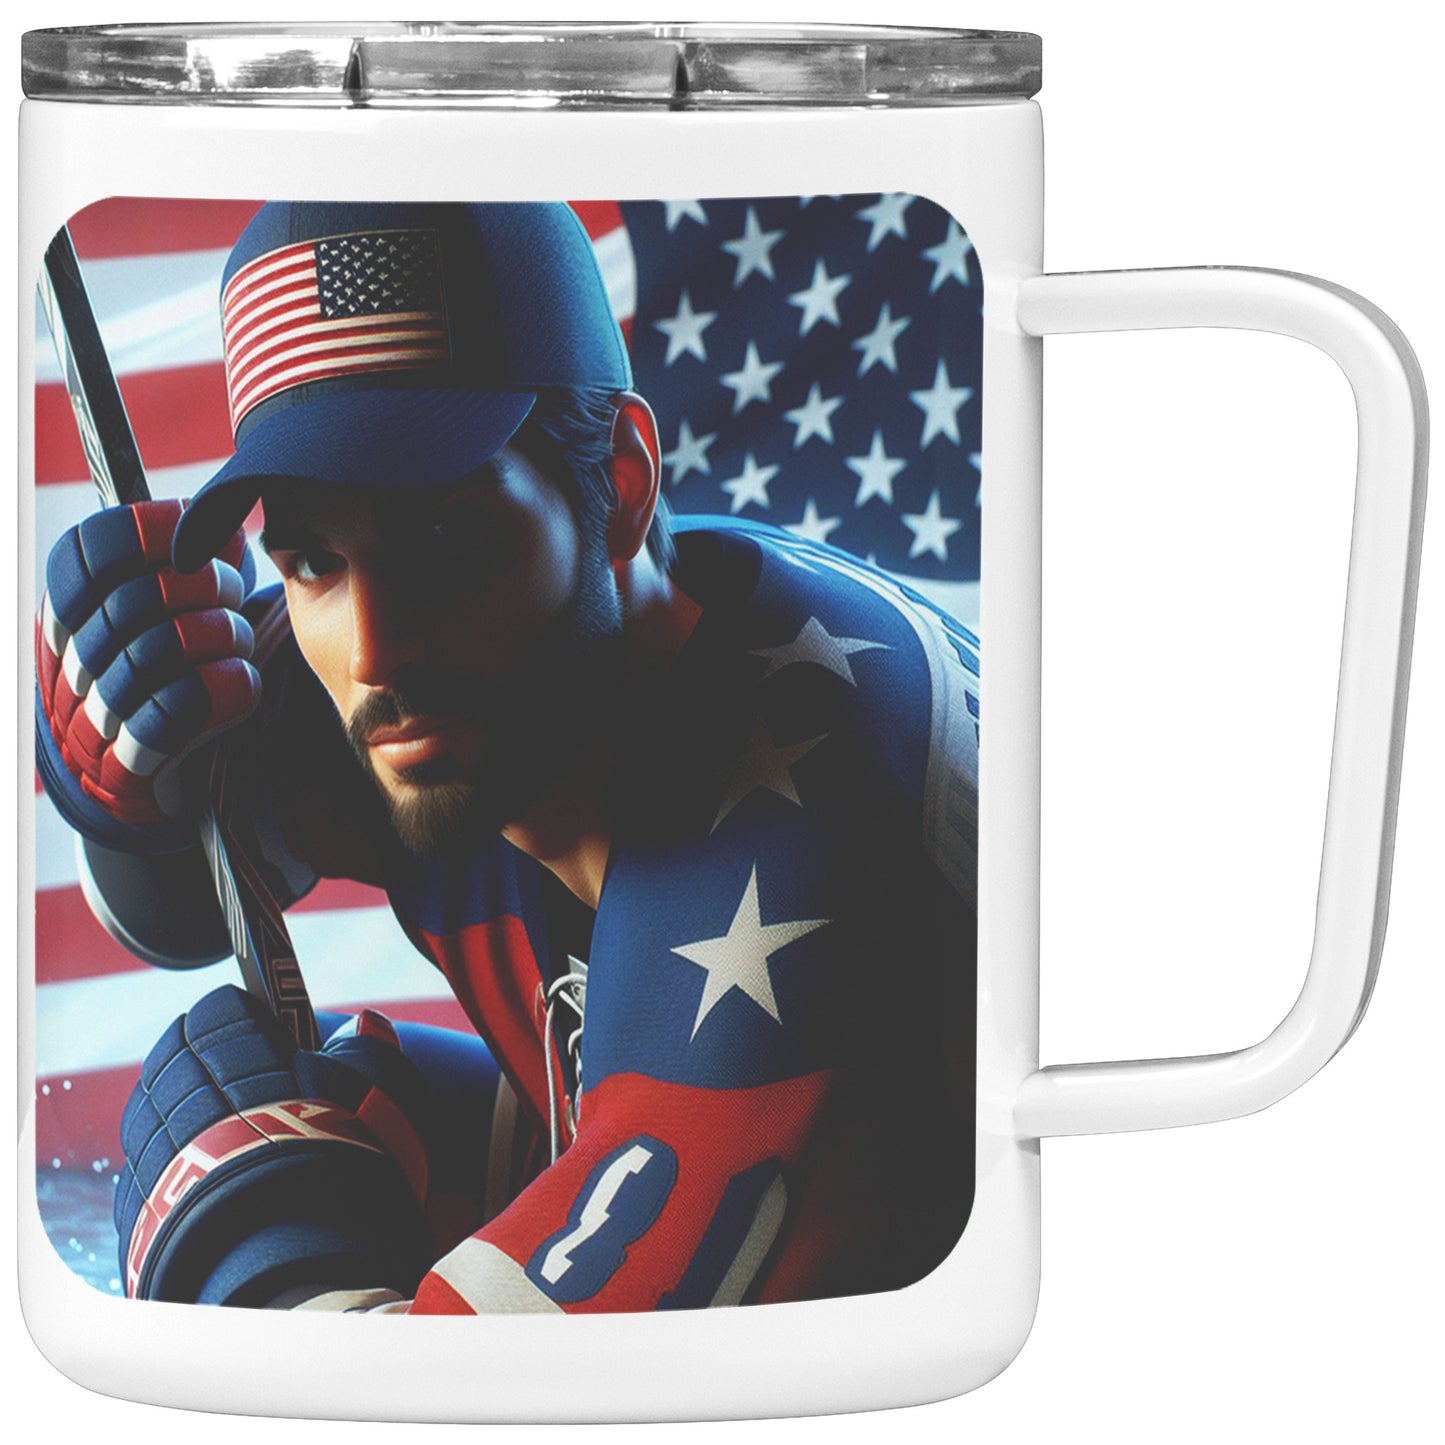 Man Ice Hockey Player - Coffee Mug #32